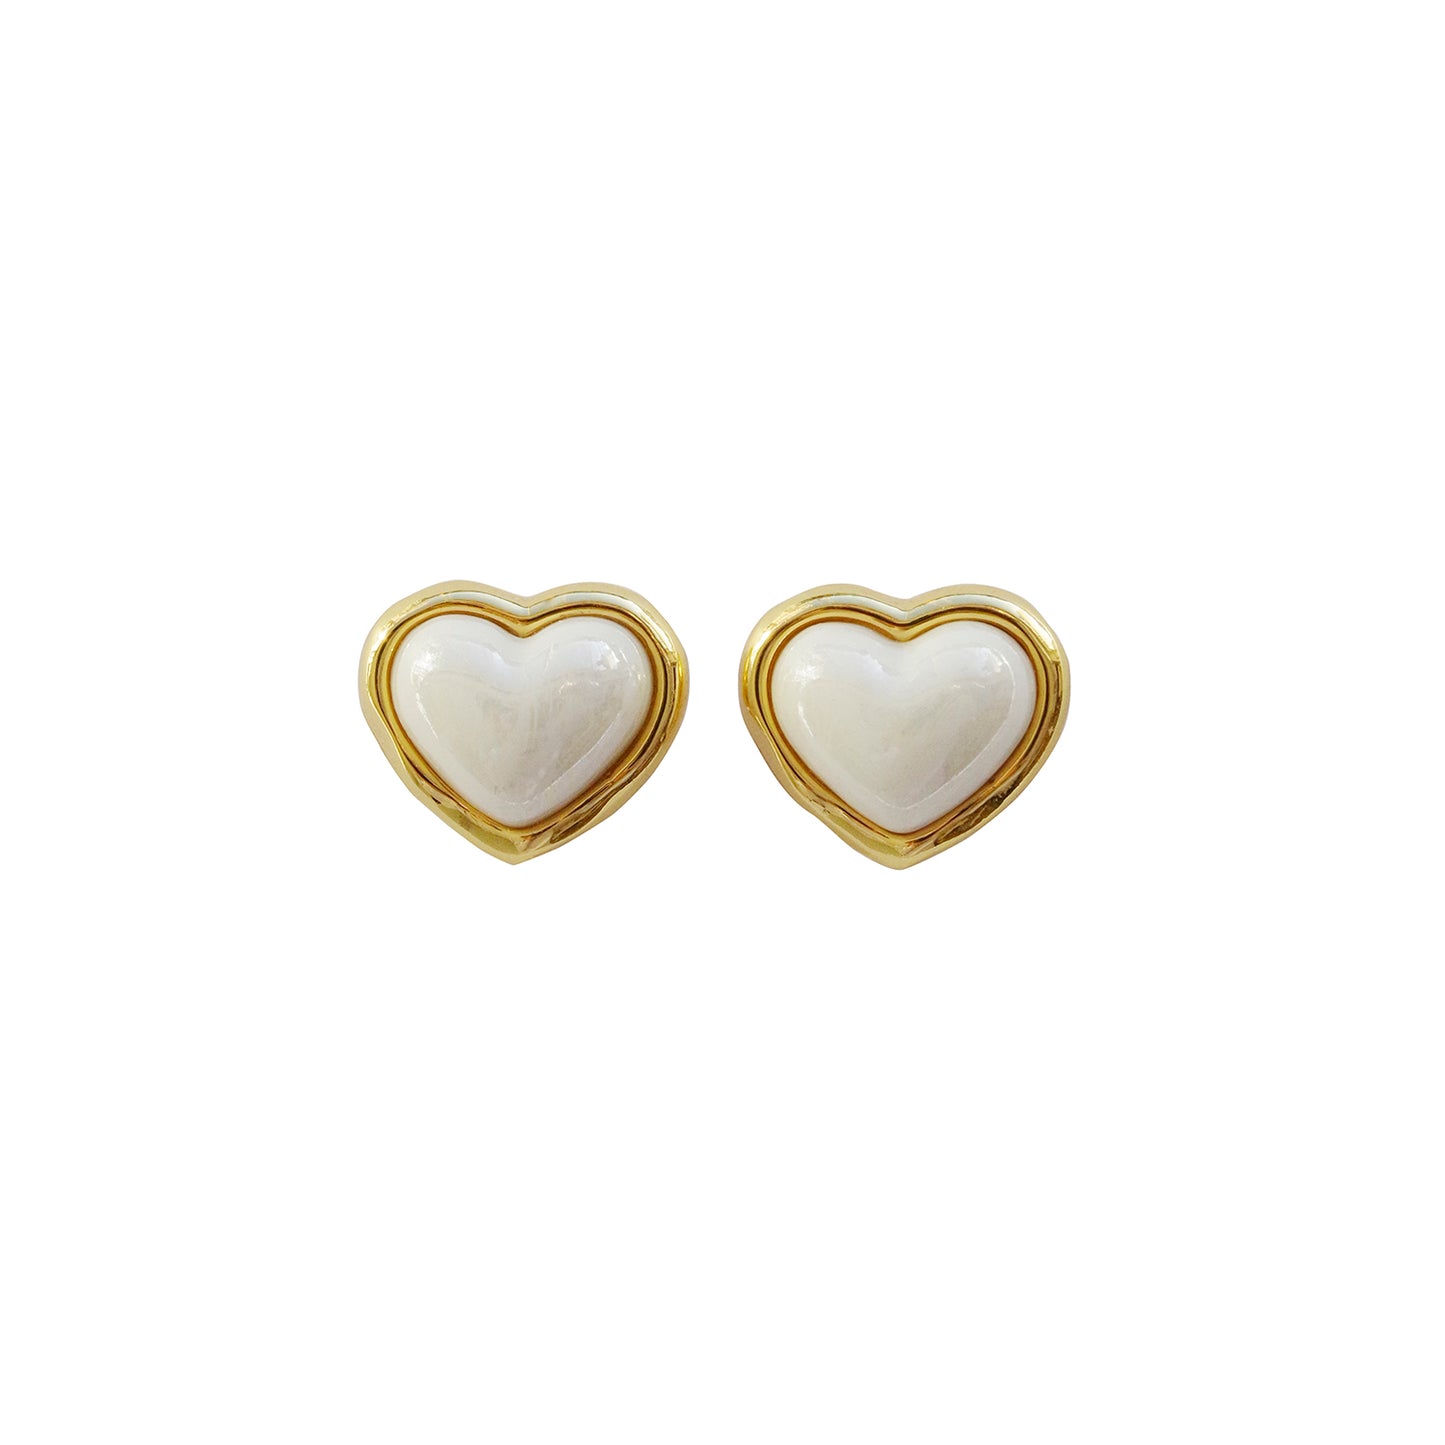 Porcelain Red Heart Stud Earrings